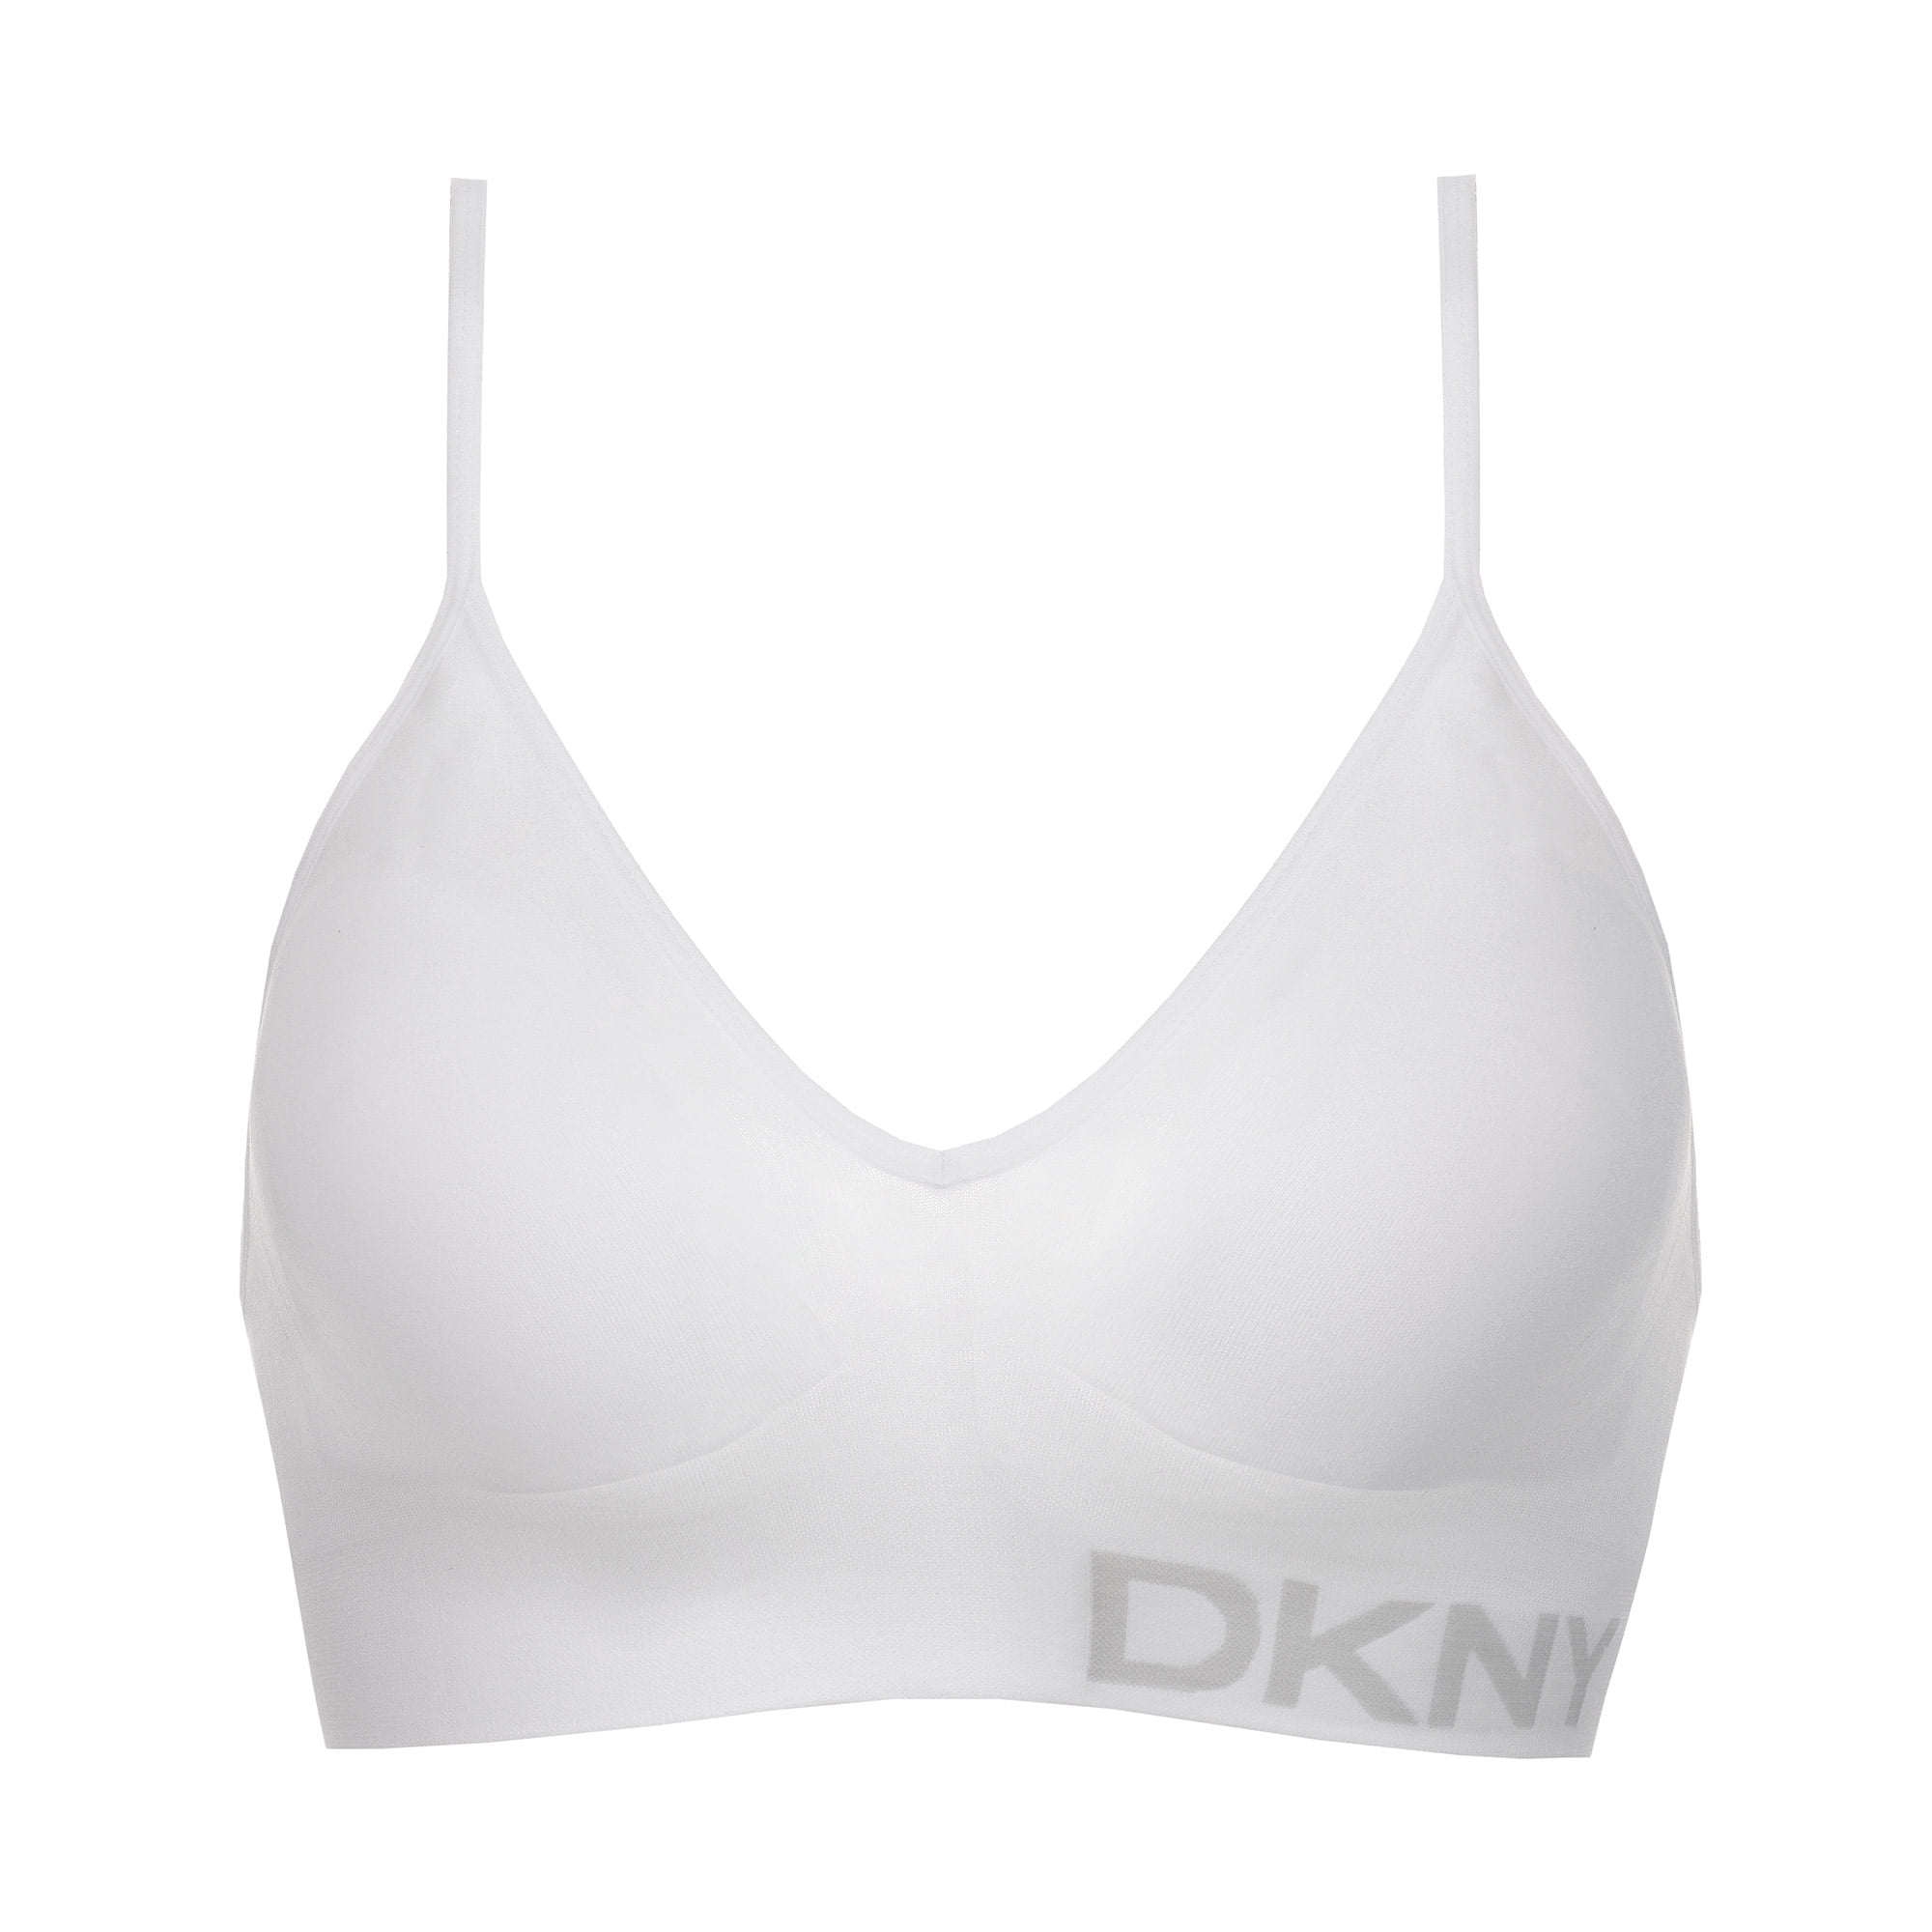 DKNY Women's Bra Sz L Reg Seamless Bralette 2-Pack White Pink 